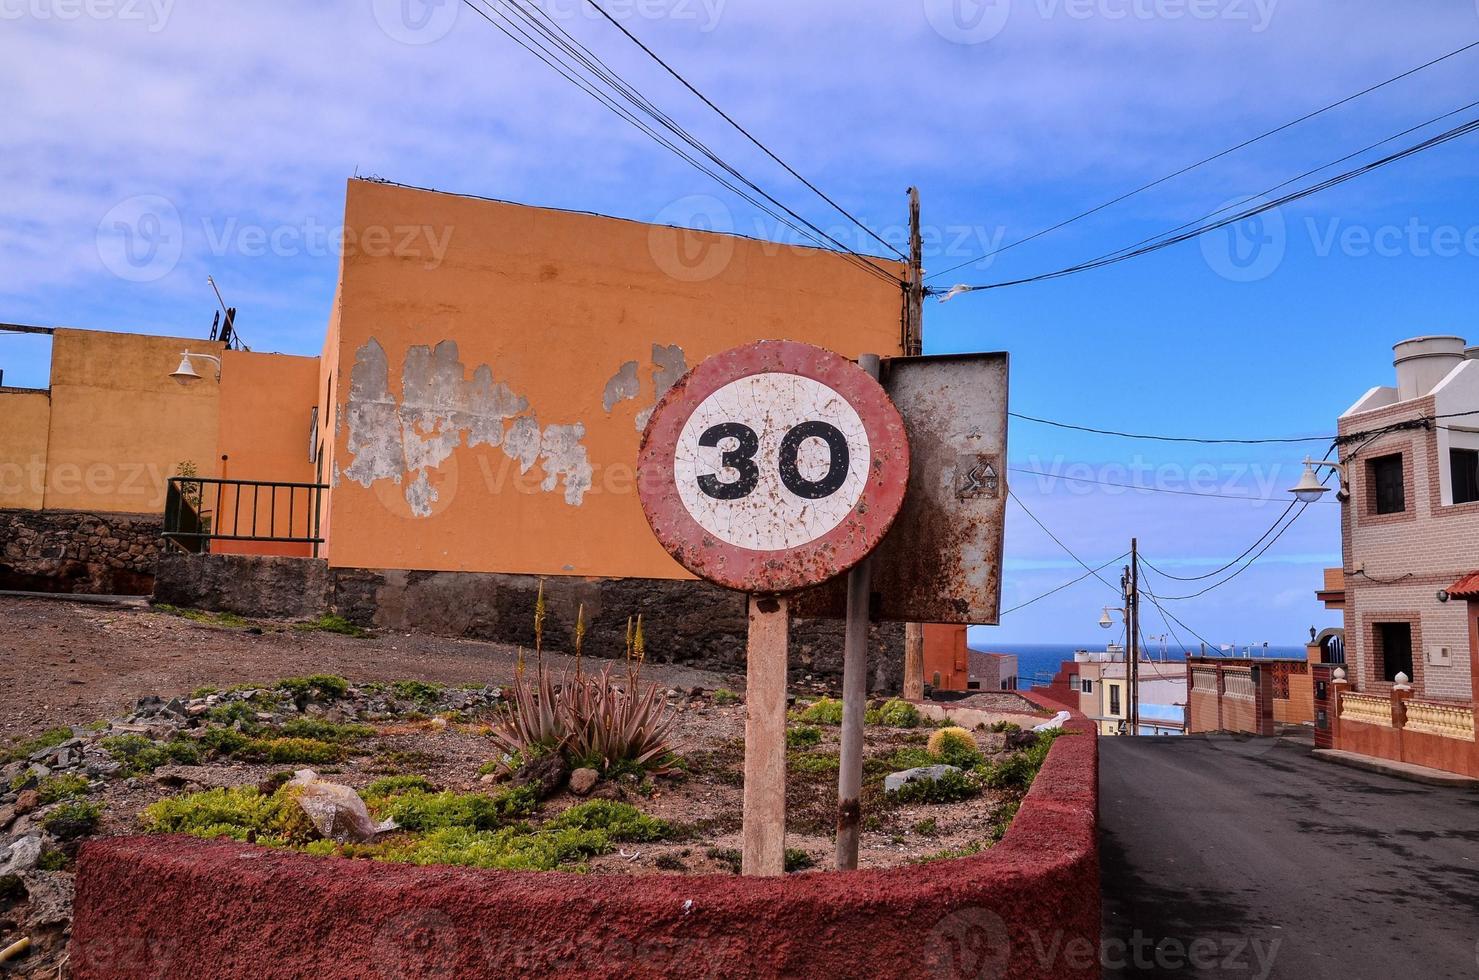 30 km speed limit sign photo